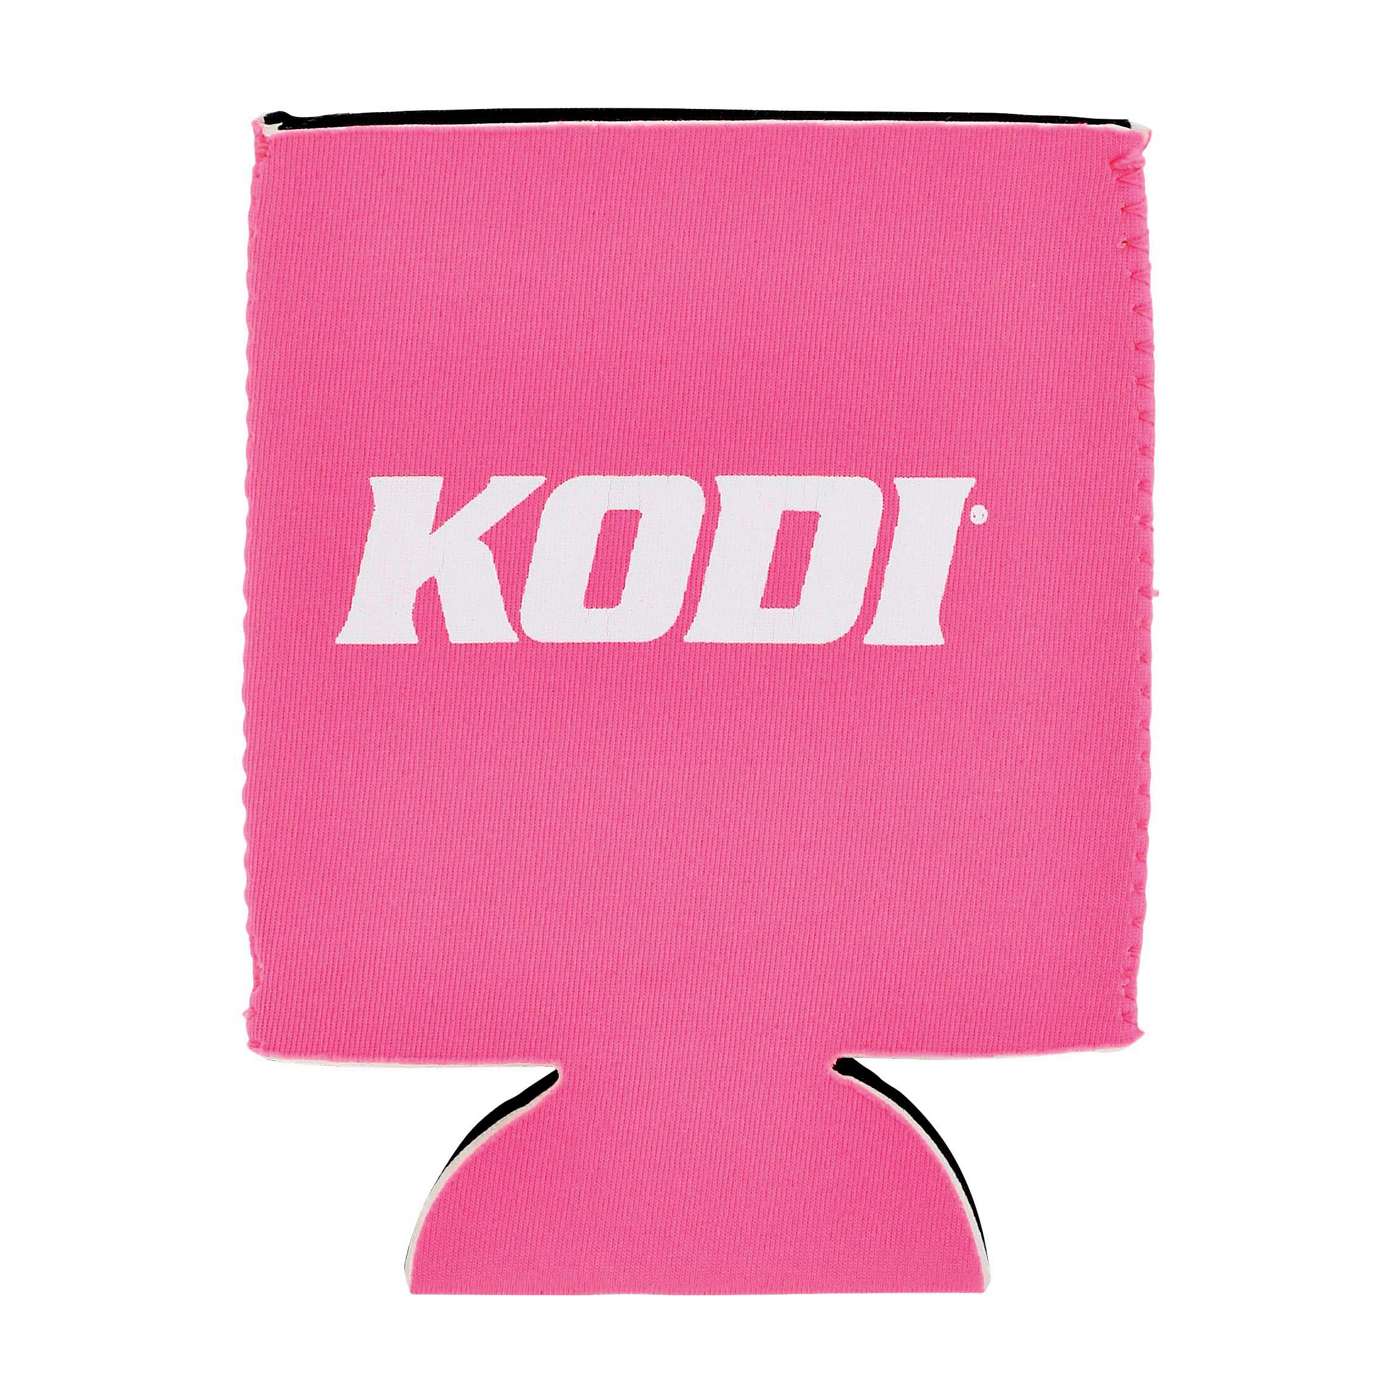 KODI by H-E-B Expeditions Regular Can Neoprene Insulator - Pink; image 1 of 2